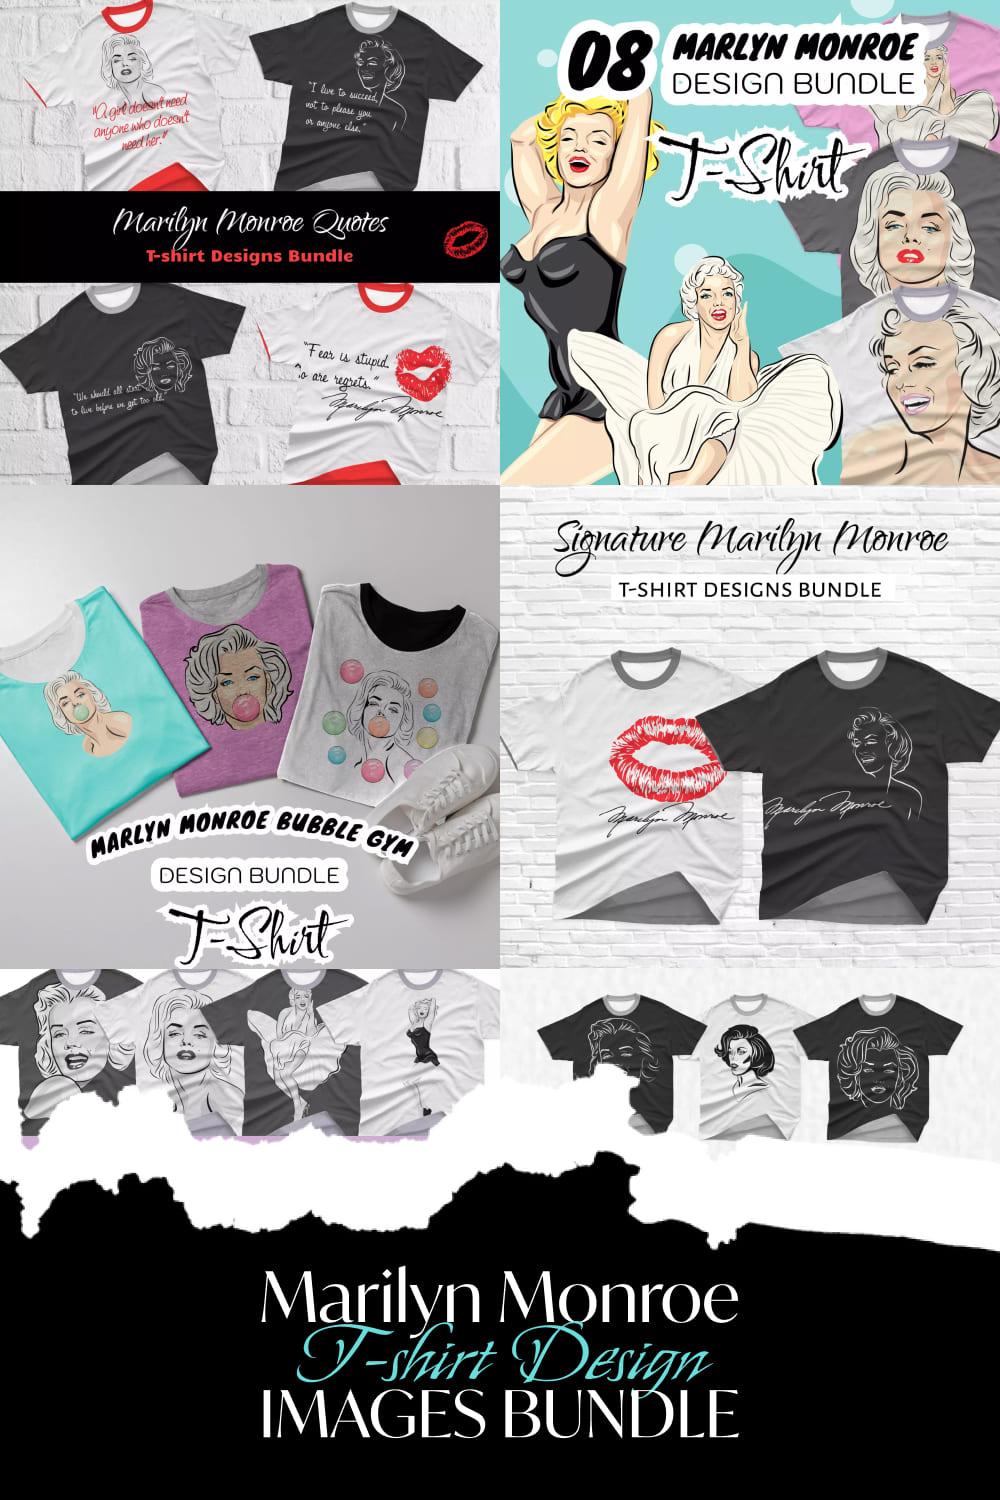 Marilyn Monroe T-shirt Design Images Bundle - Pinterest.